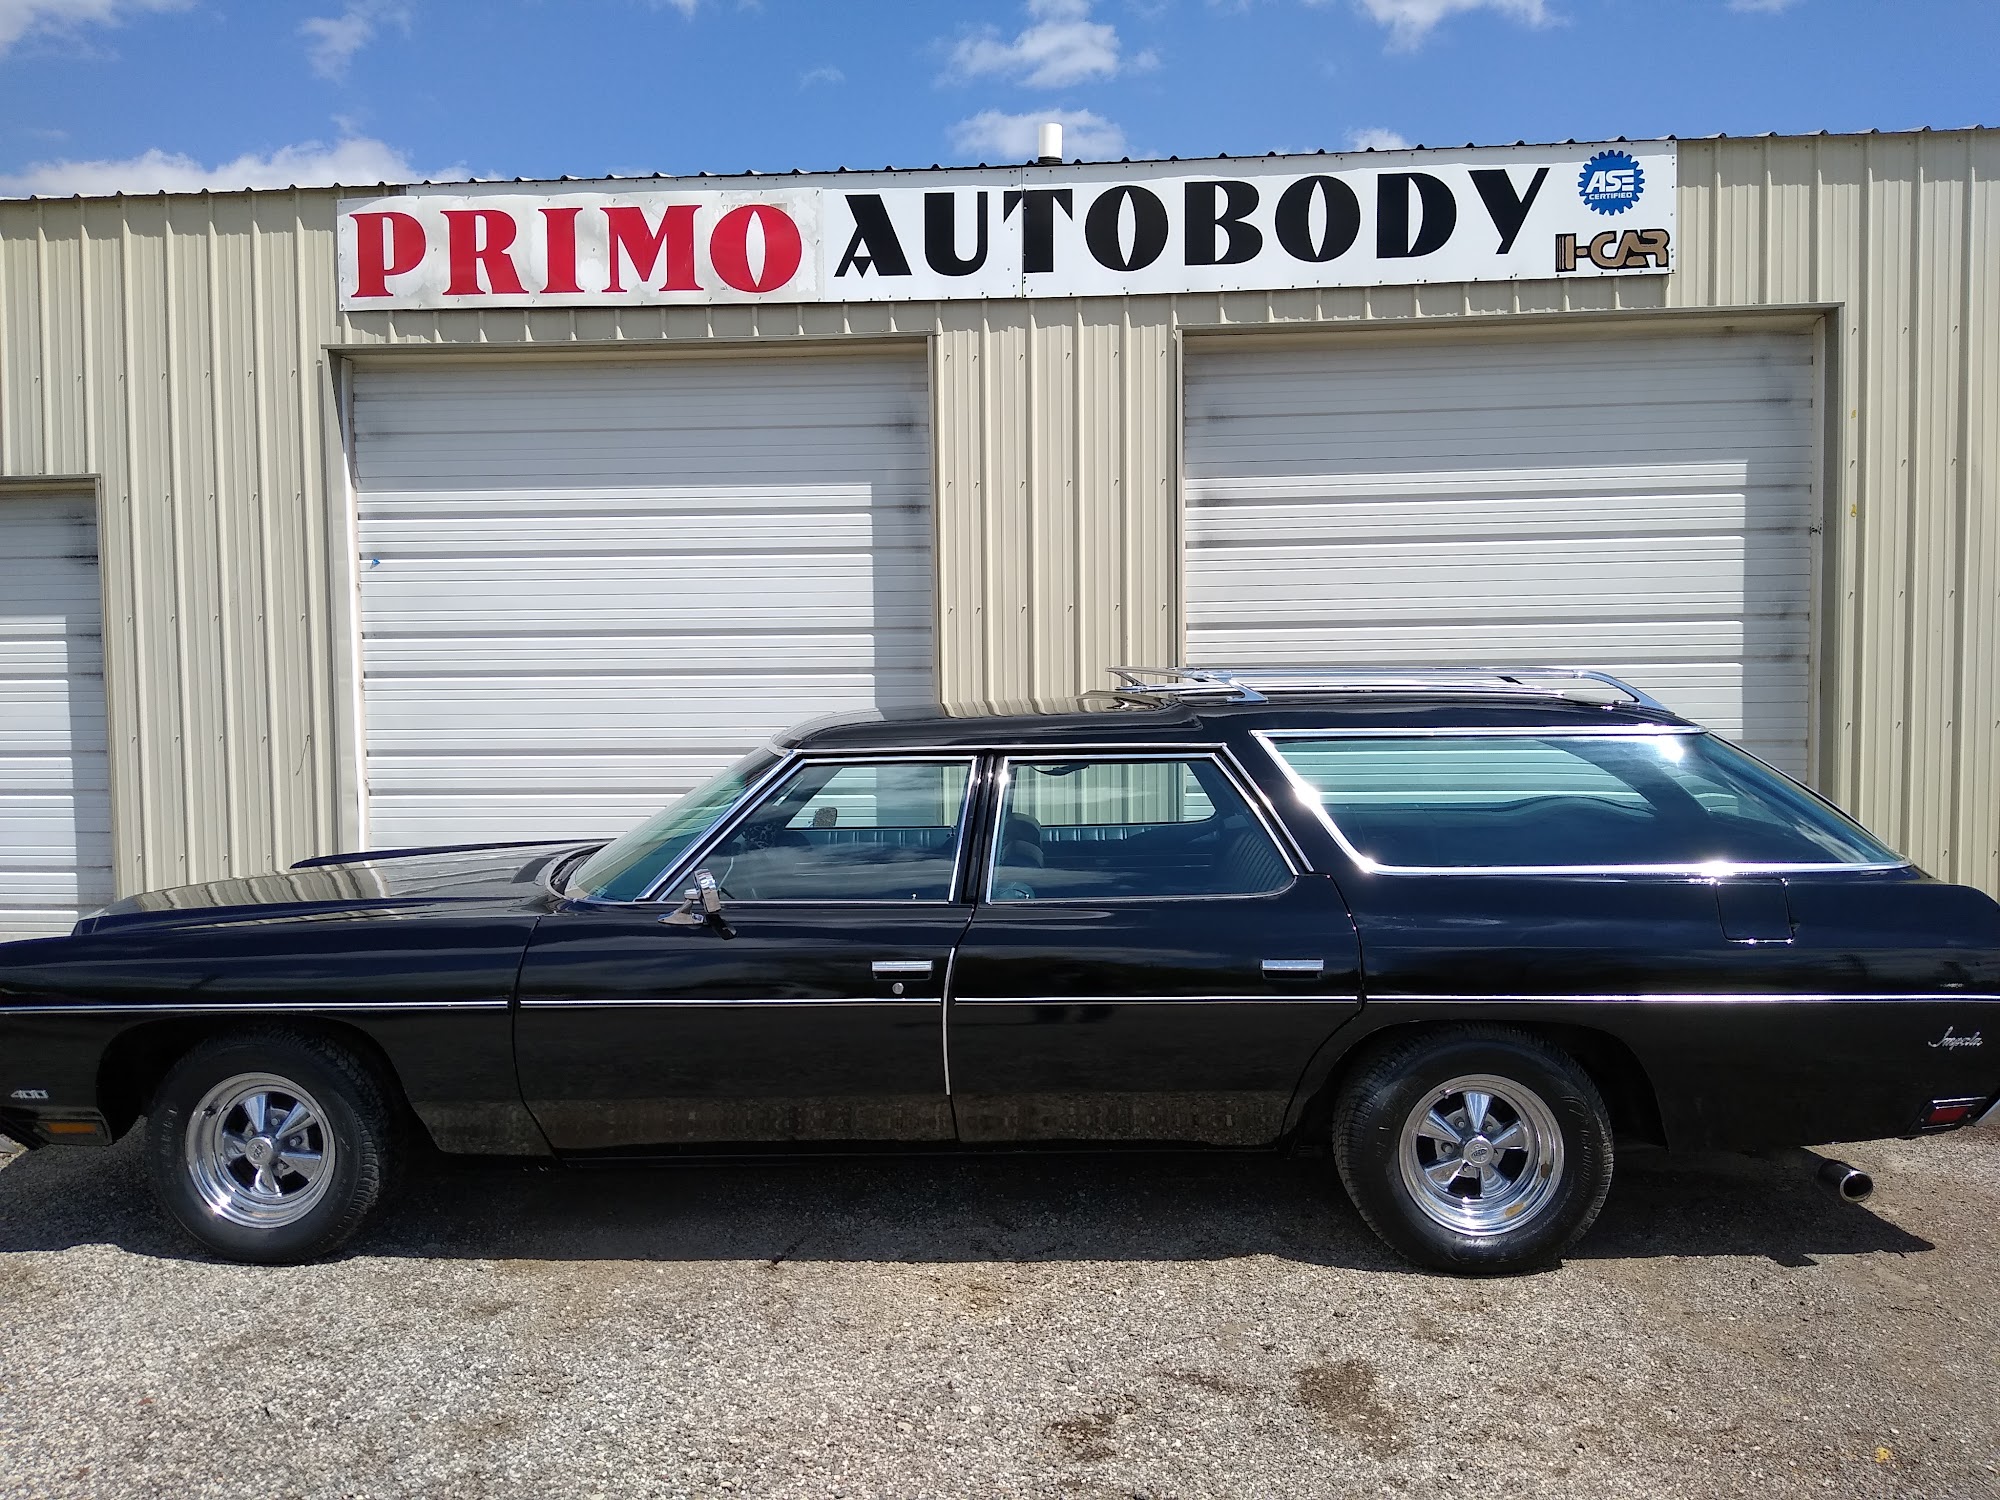 Primo Autobody and Custom